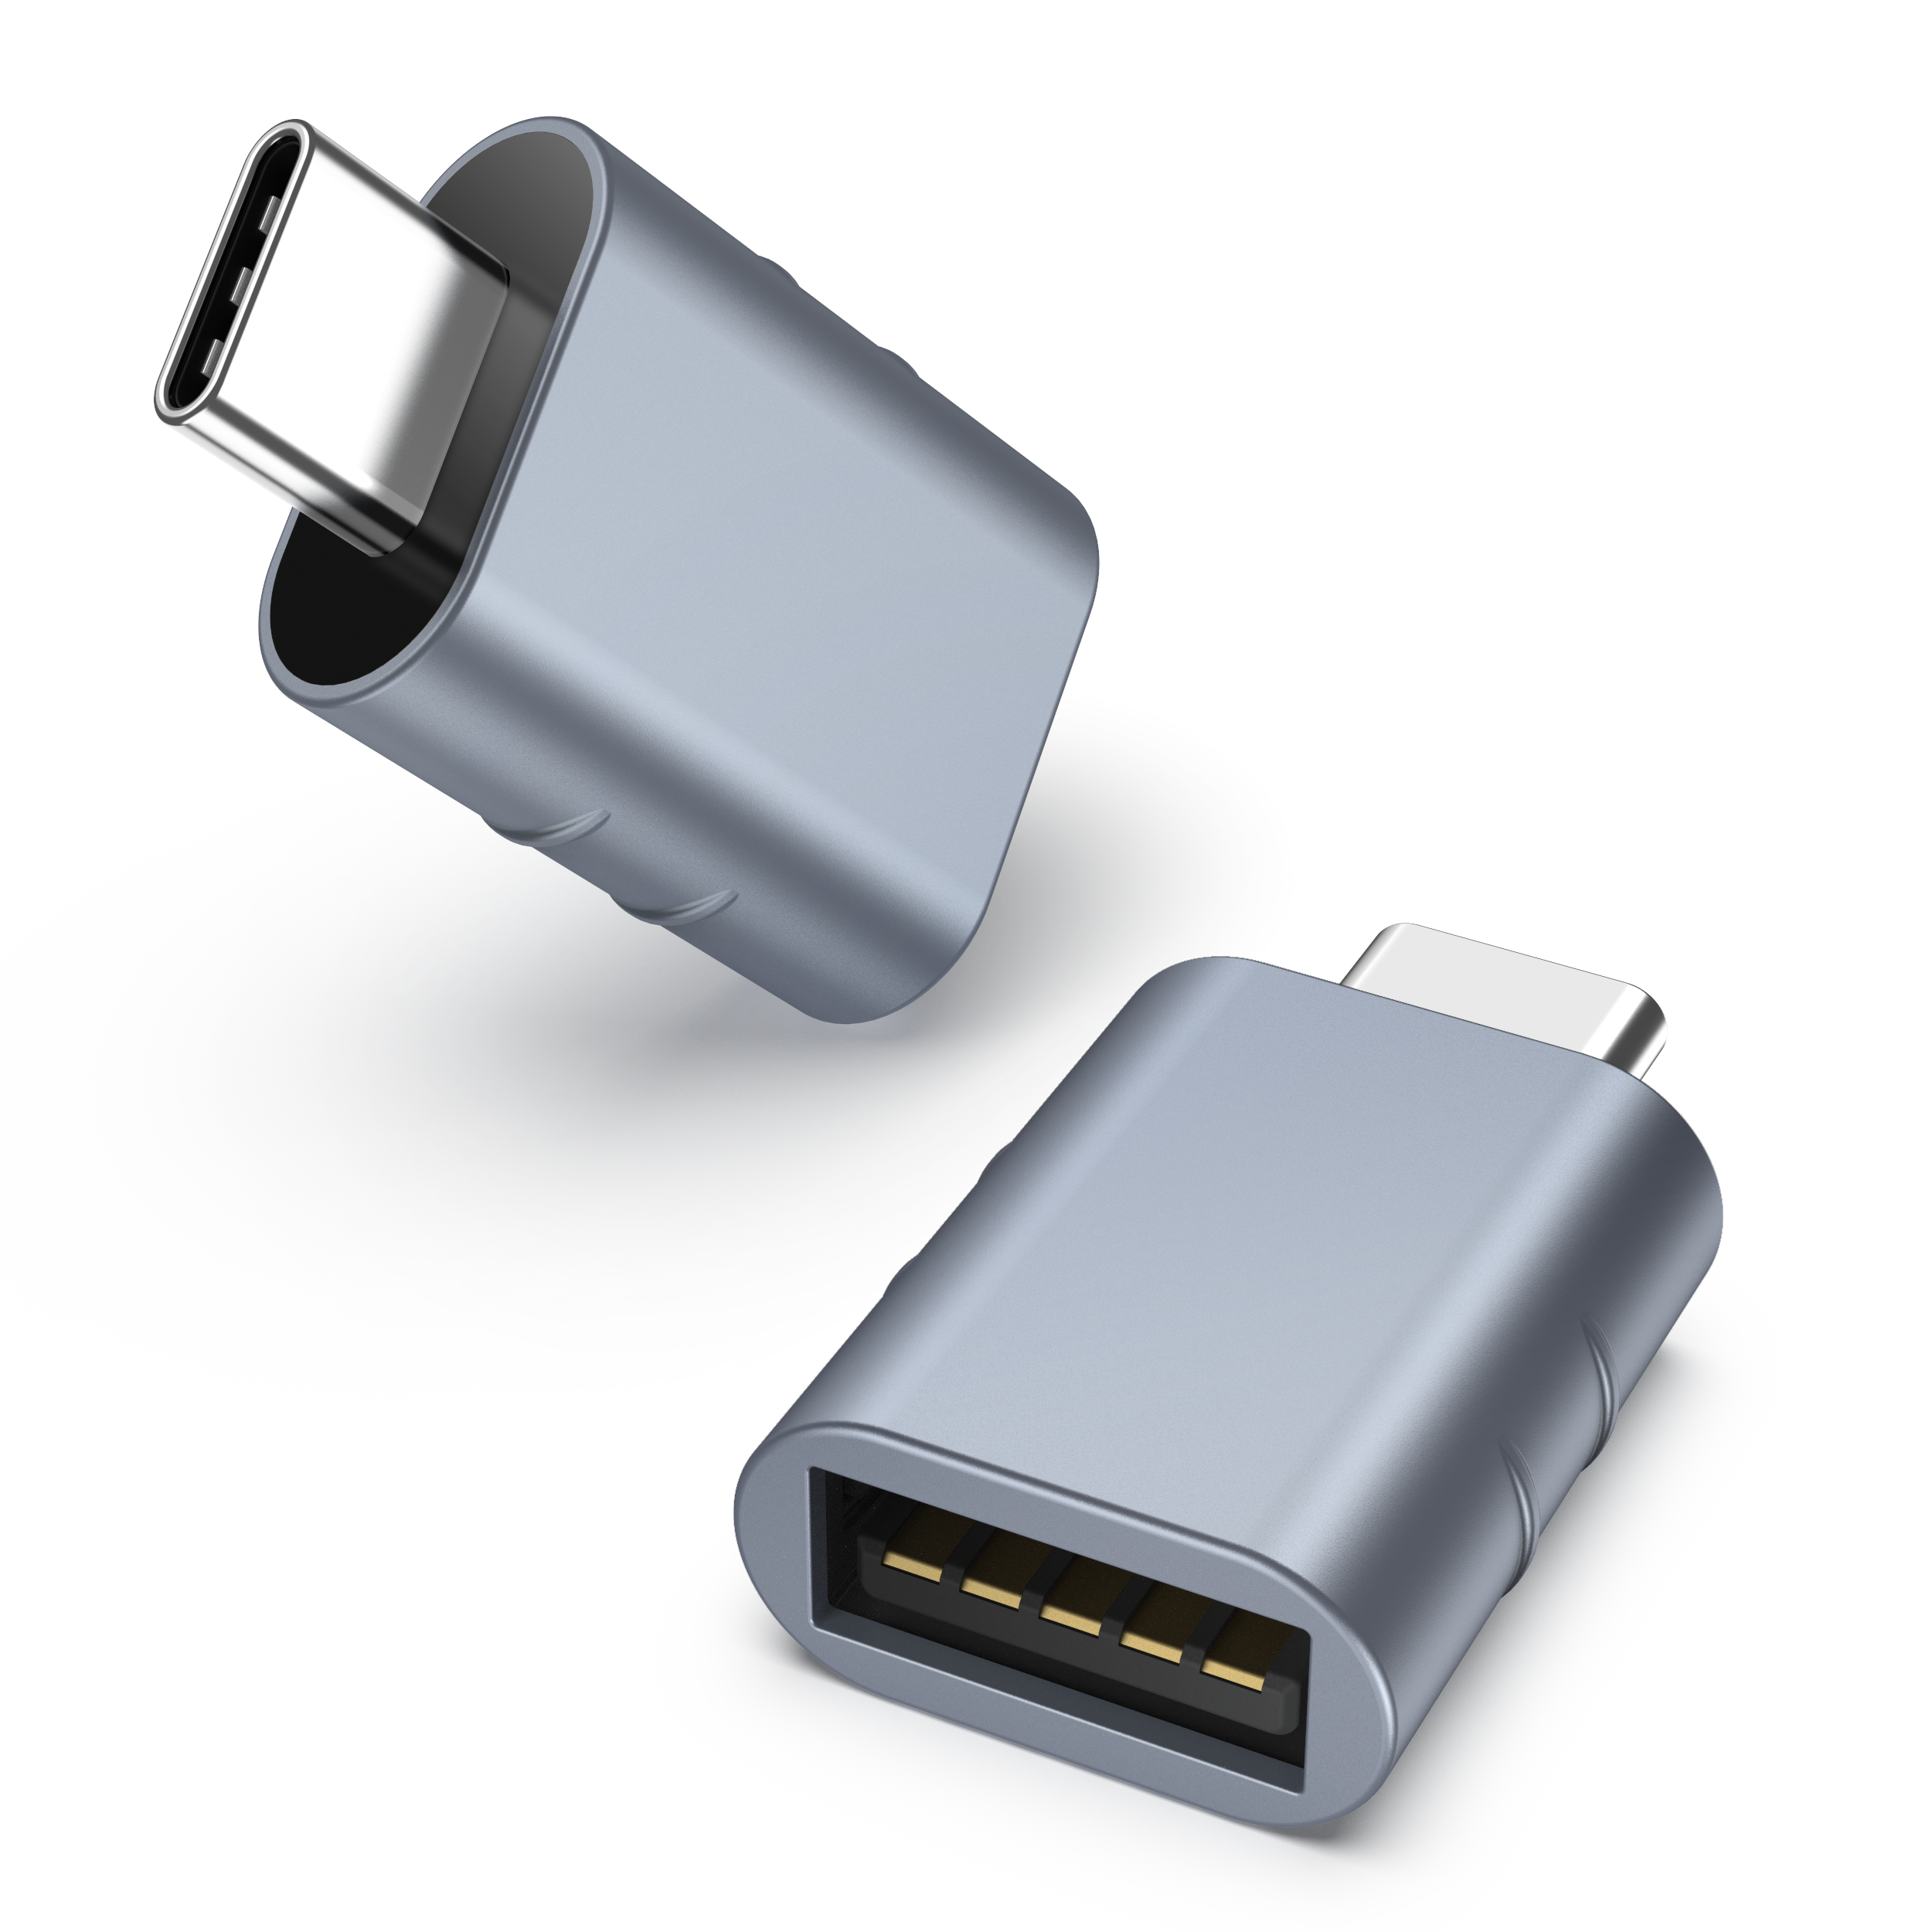  USB C Coupler, Female To Female Adapter 2 Pack USB